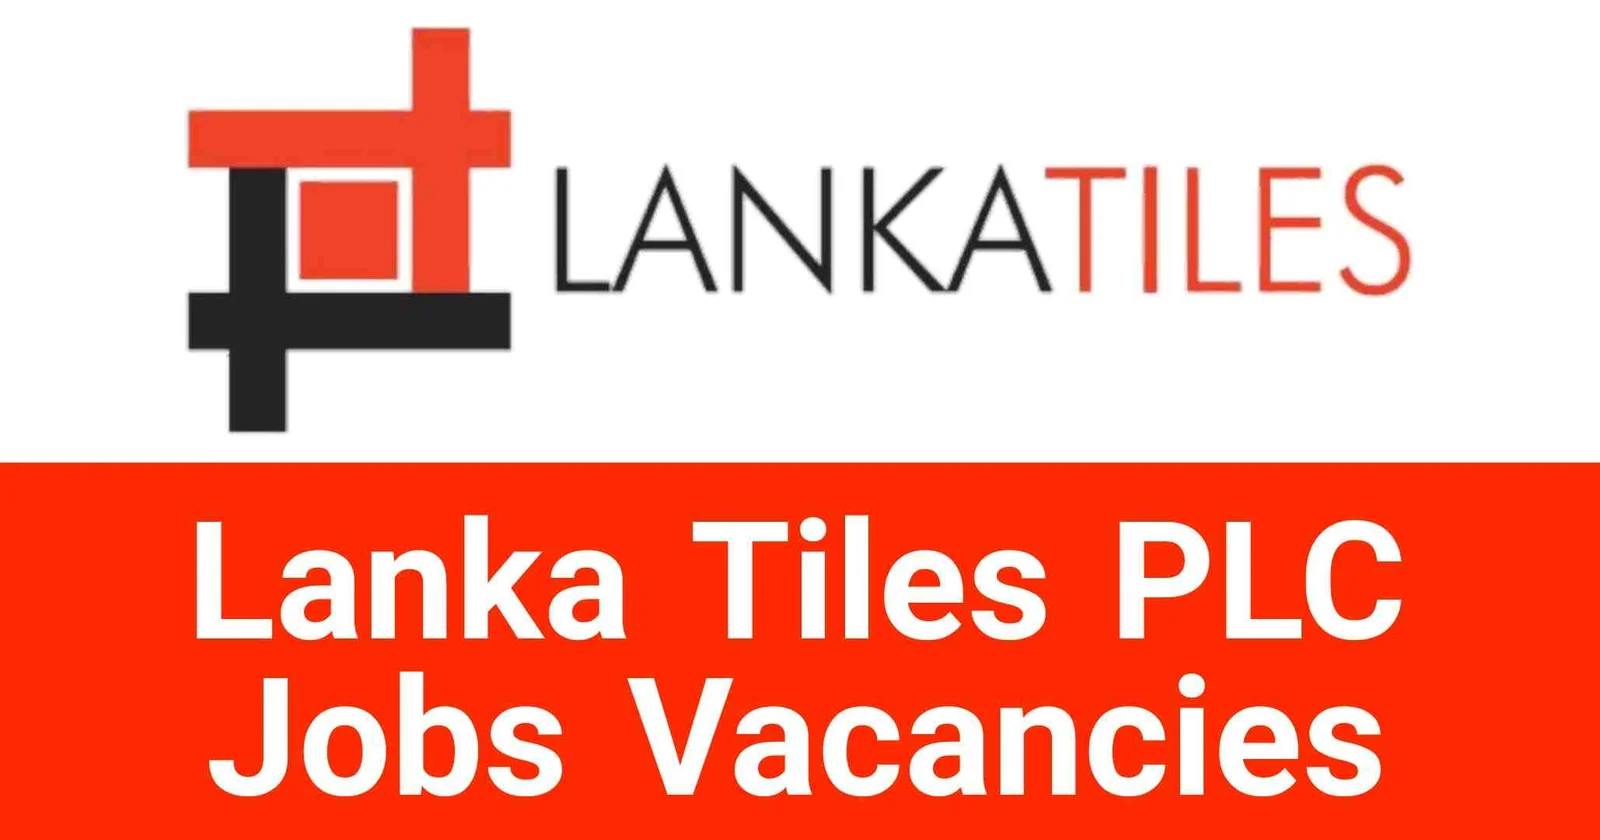 Lanka Tiles PLC Jobs Vacancies